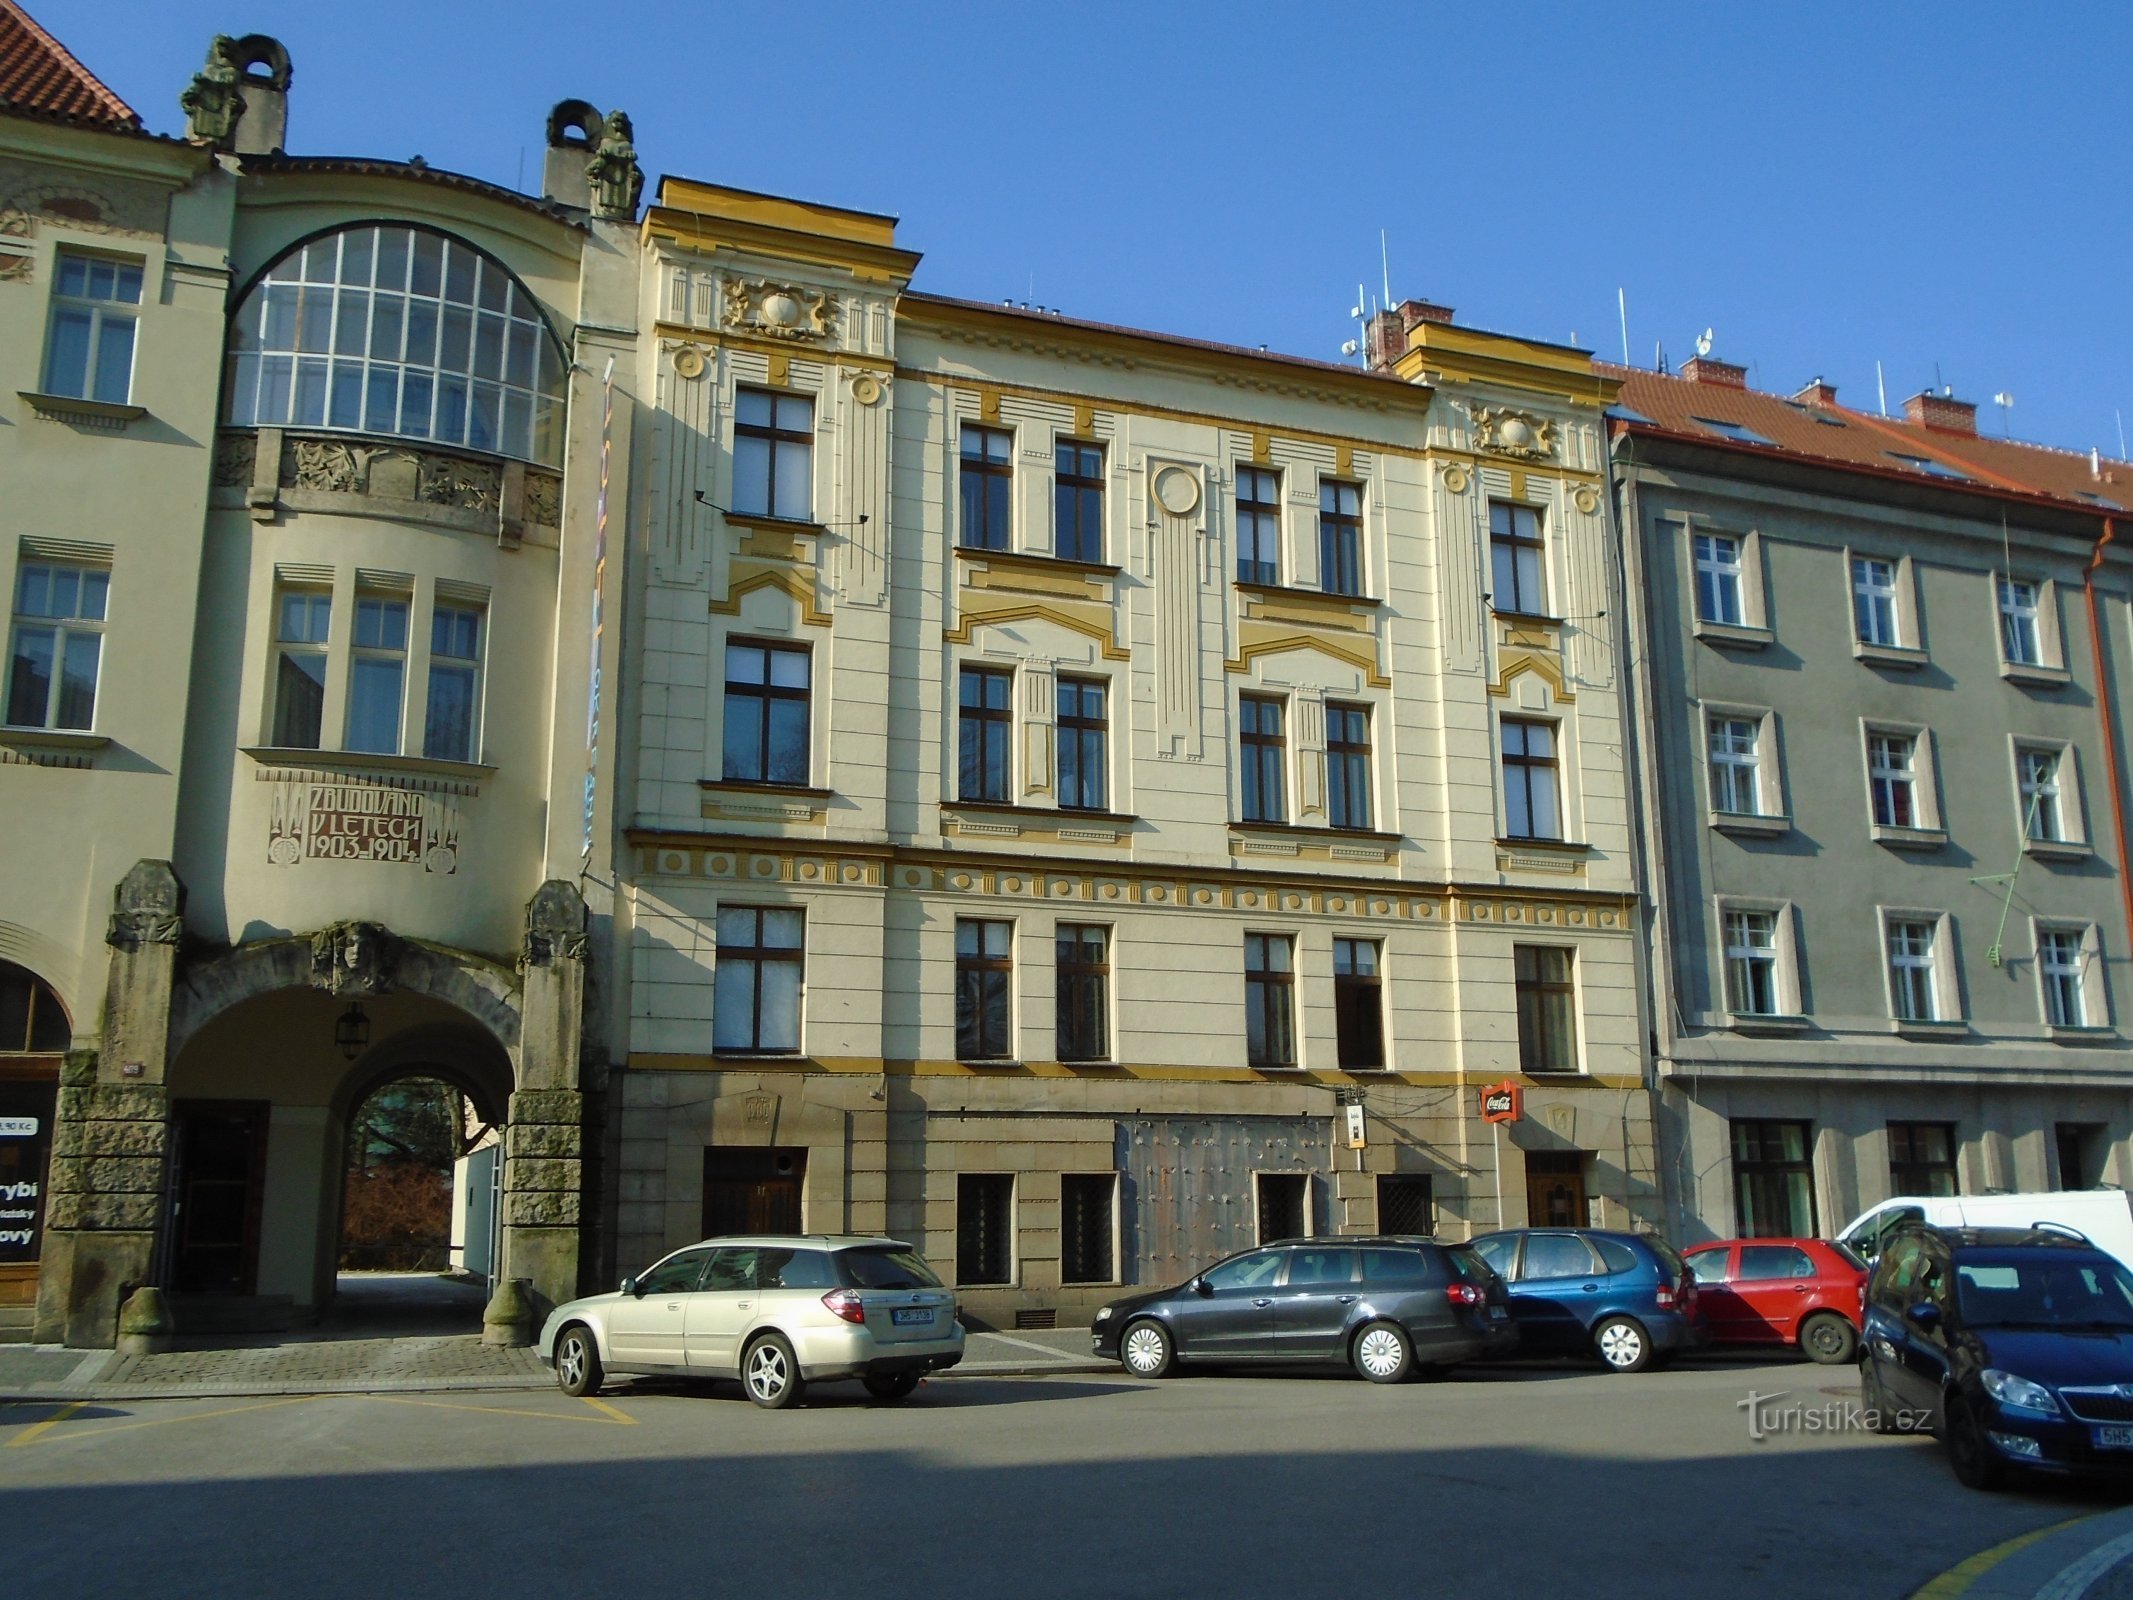 Palackého n. 359 (Hradec Králové)